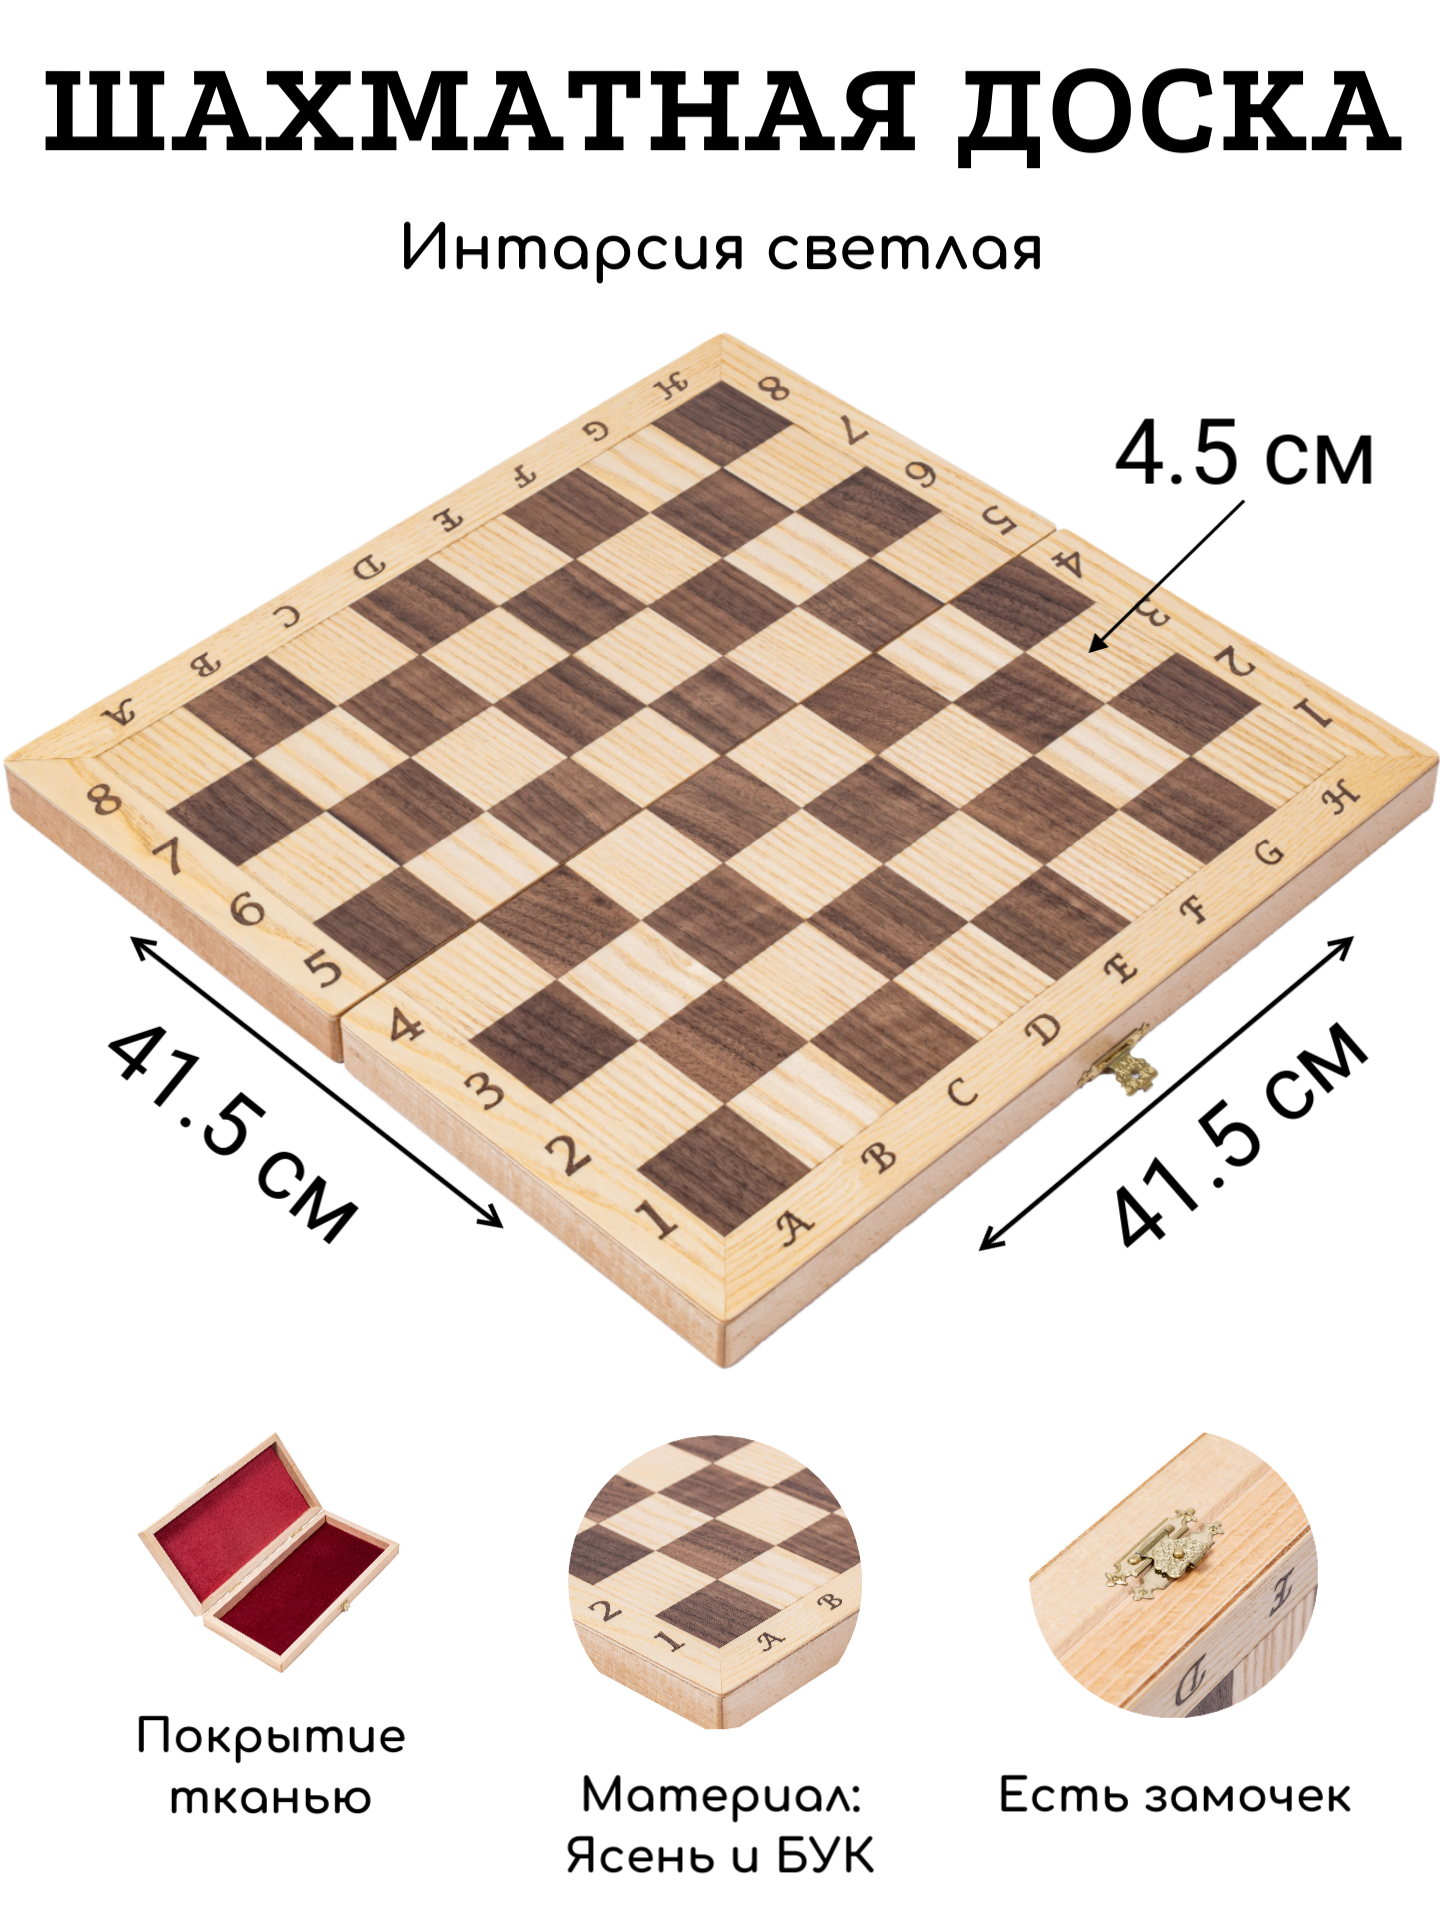 Шахматная доска без фигур Lavochkashop Турнирная 41 5 см интарсия stav042 великая шахматная доска